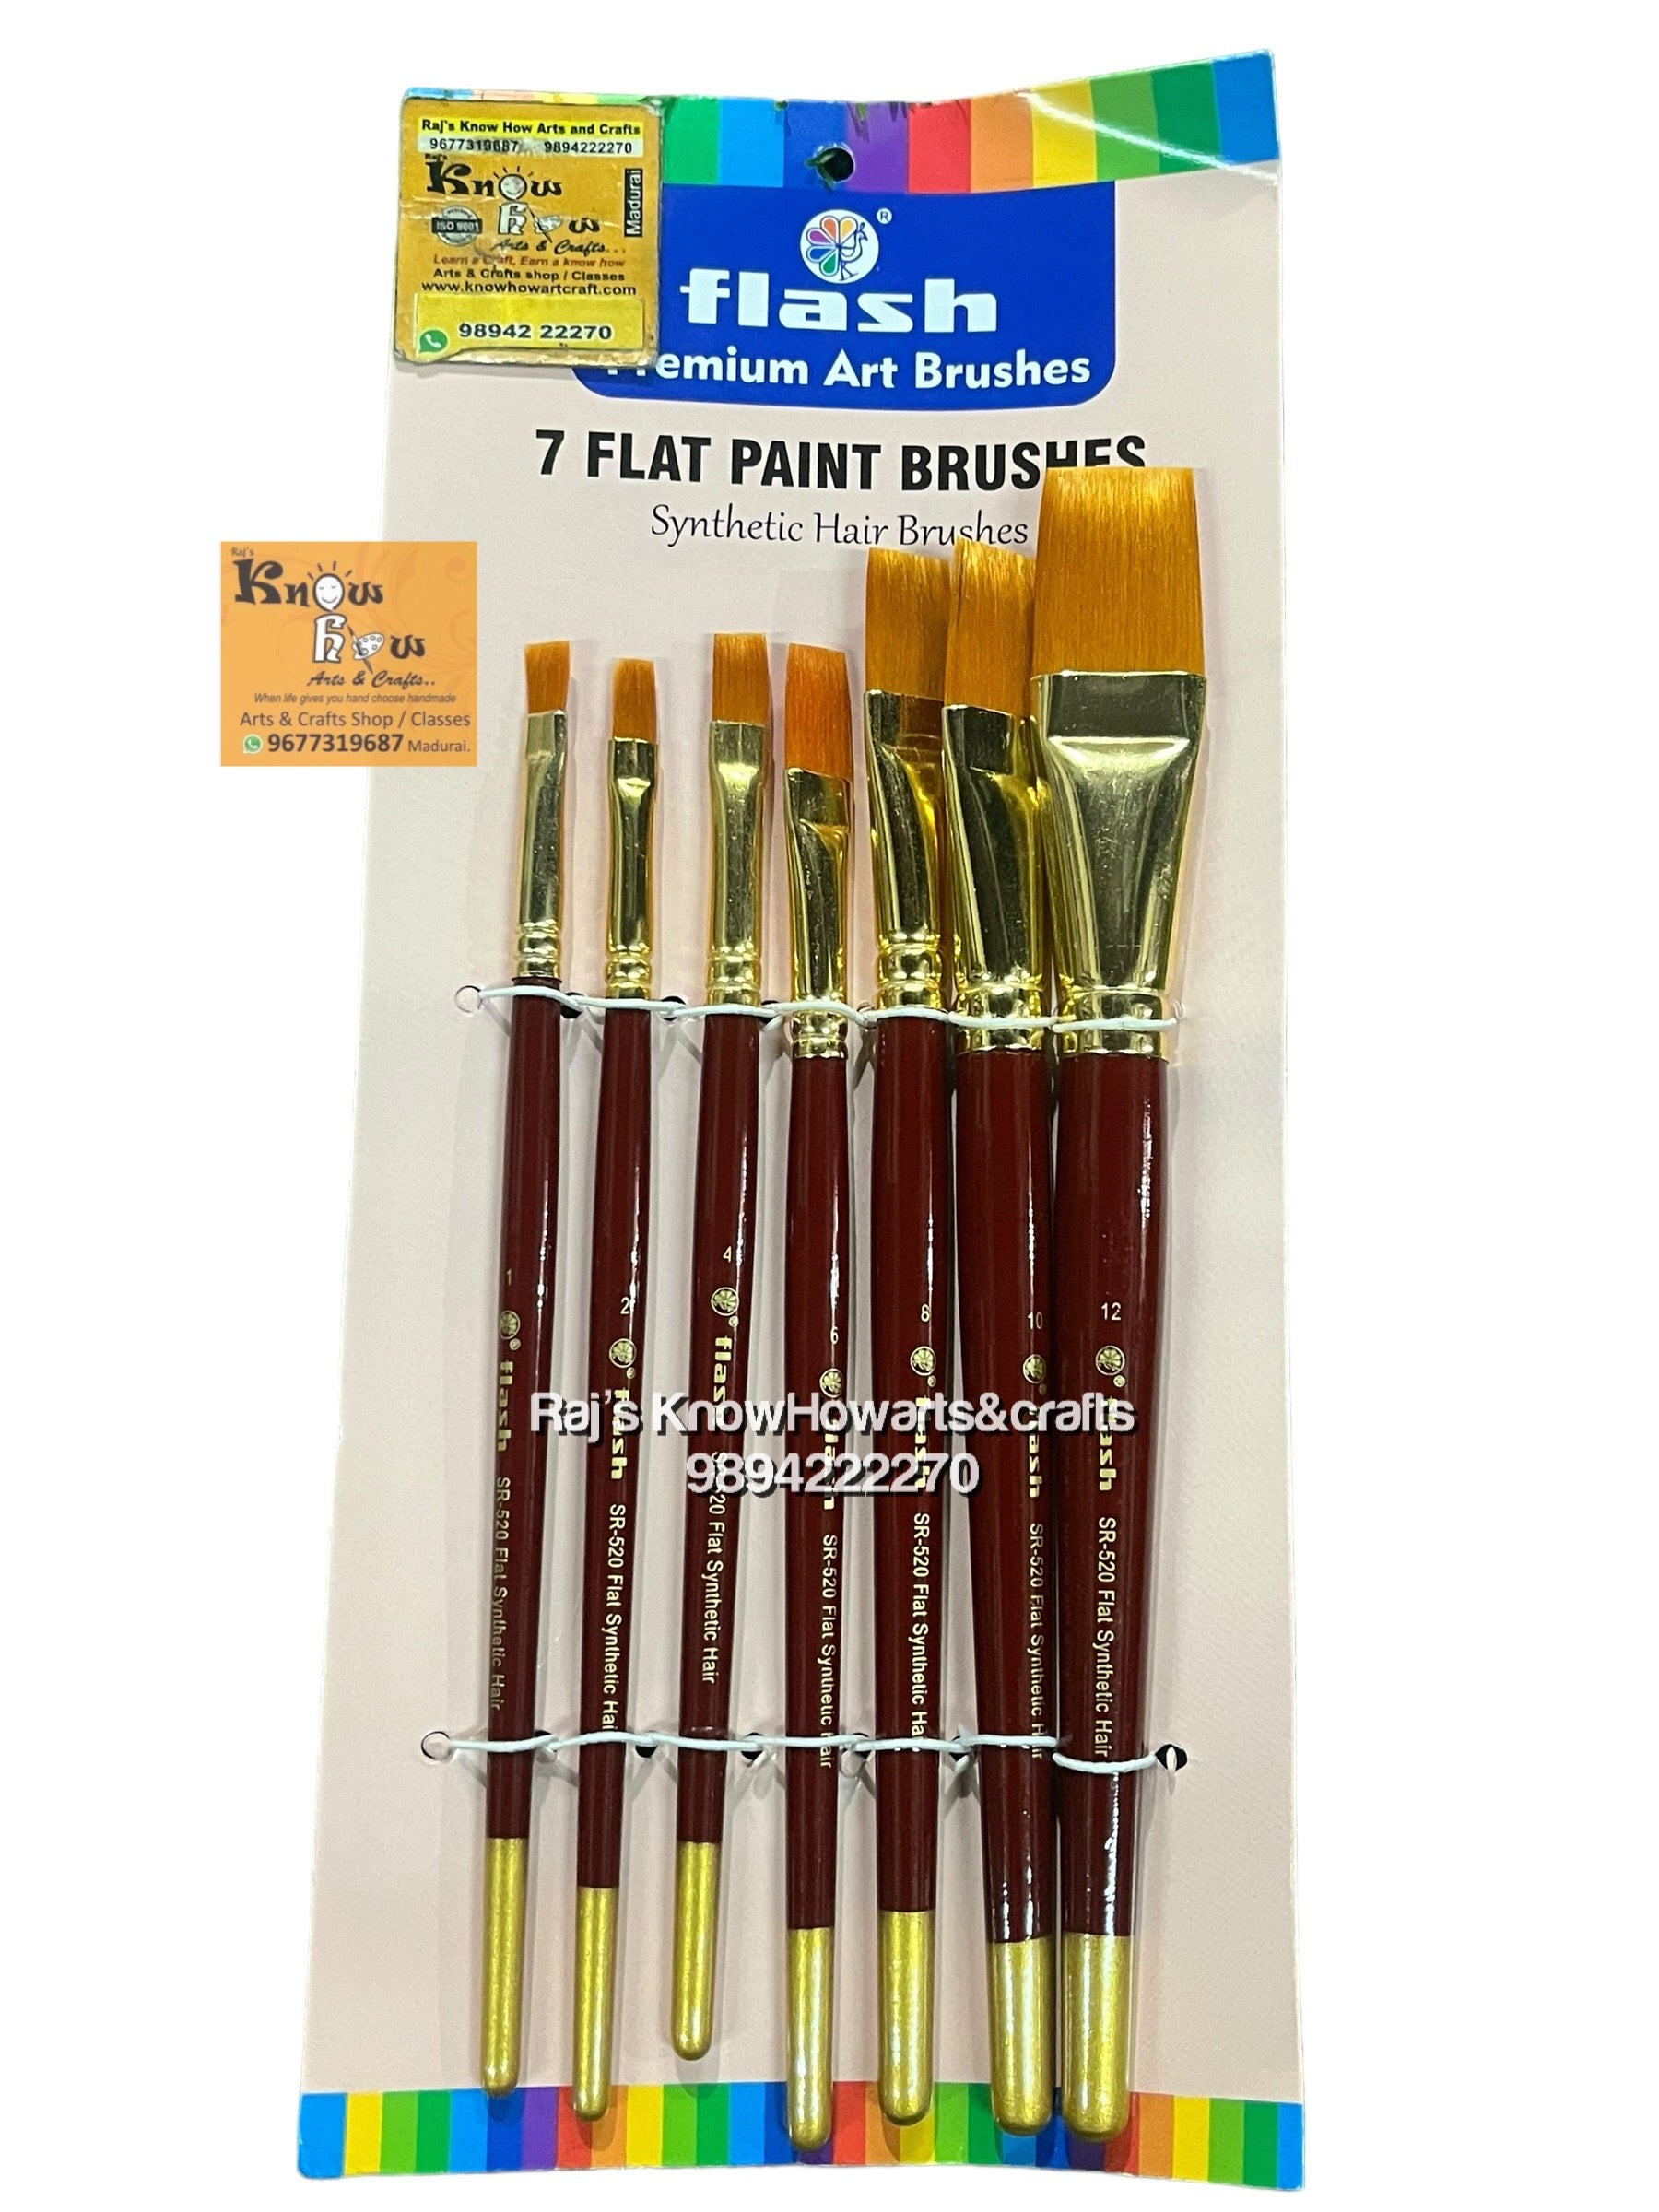 Flash premium art brushes 7 flat paint brushes